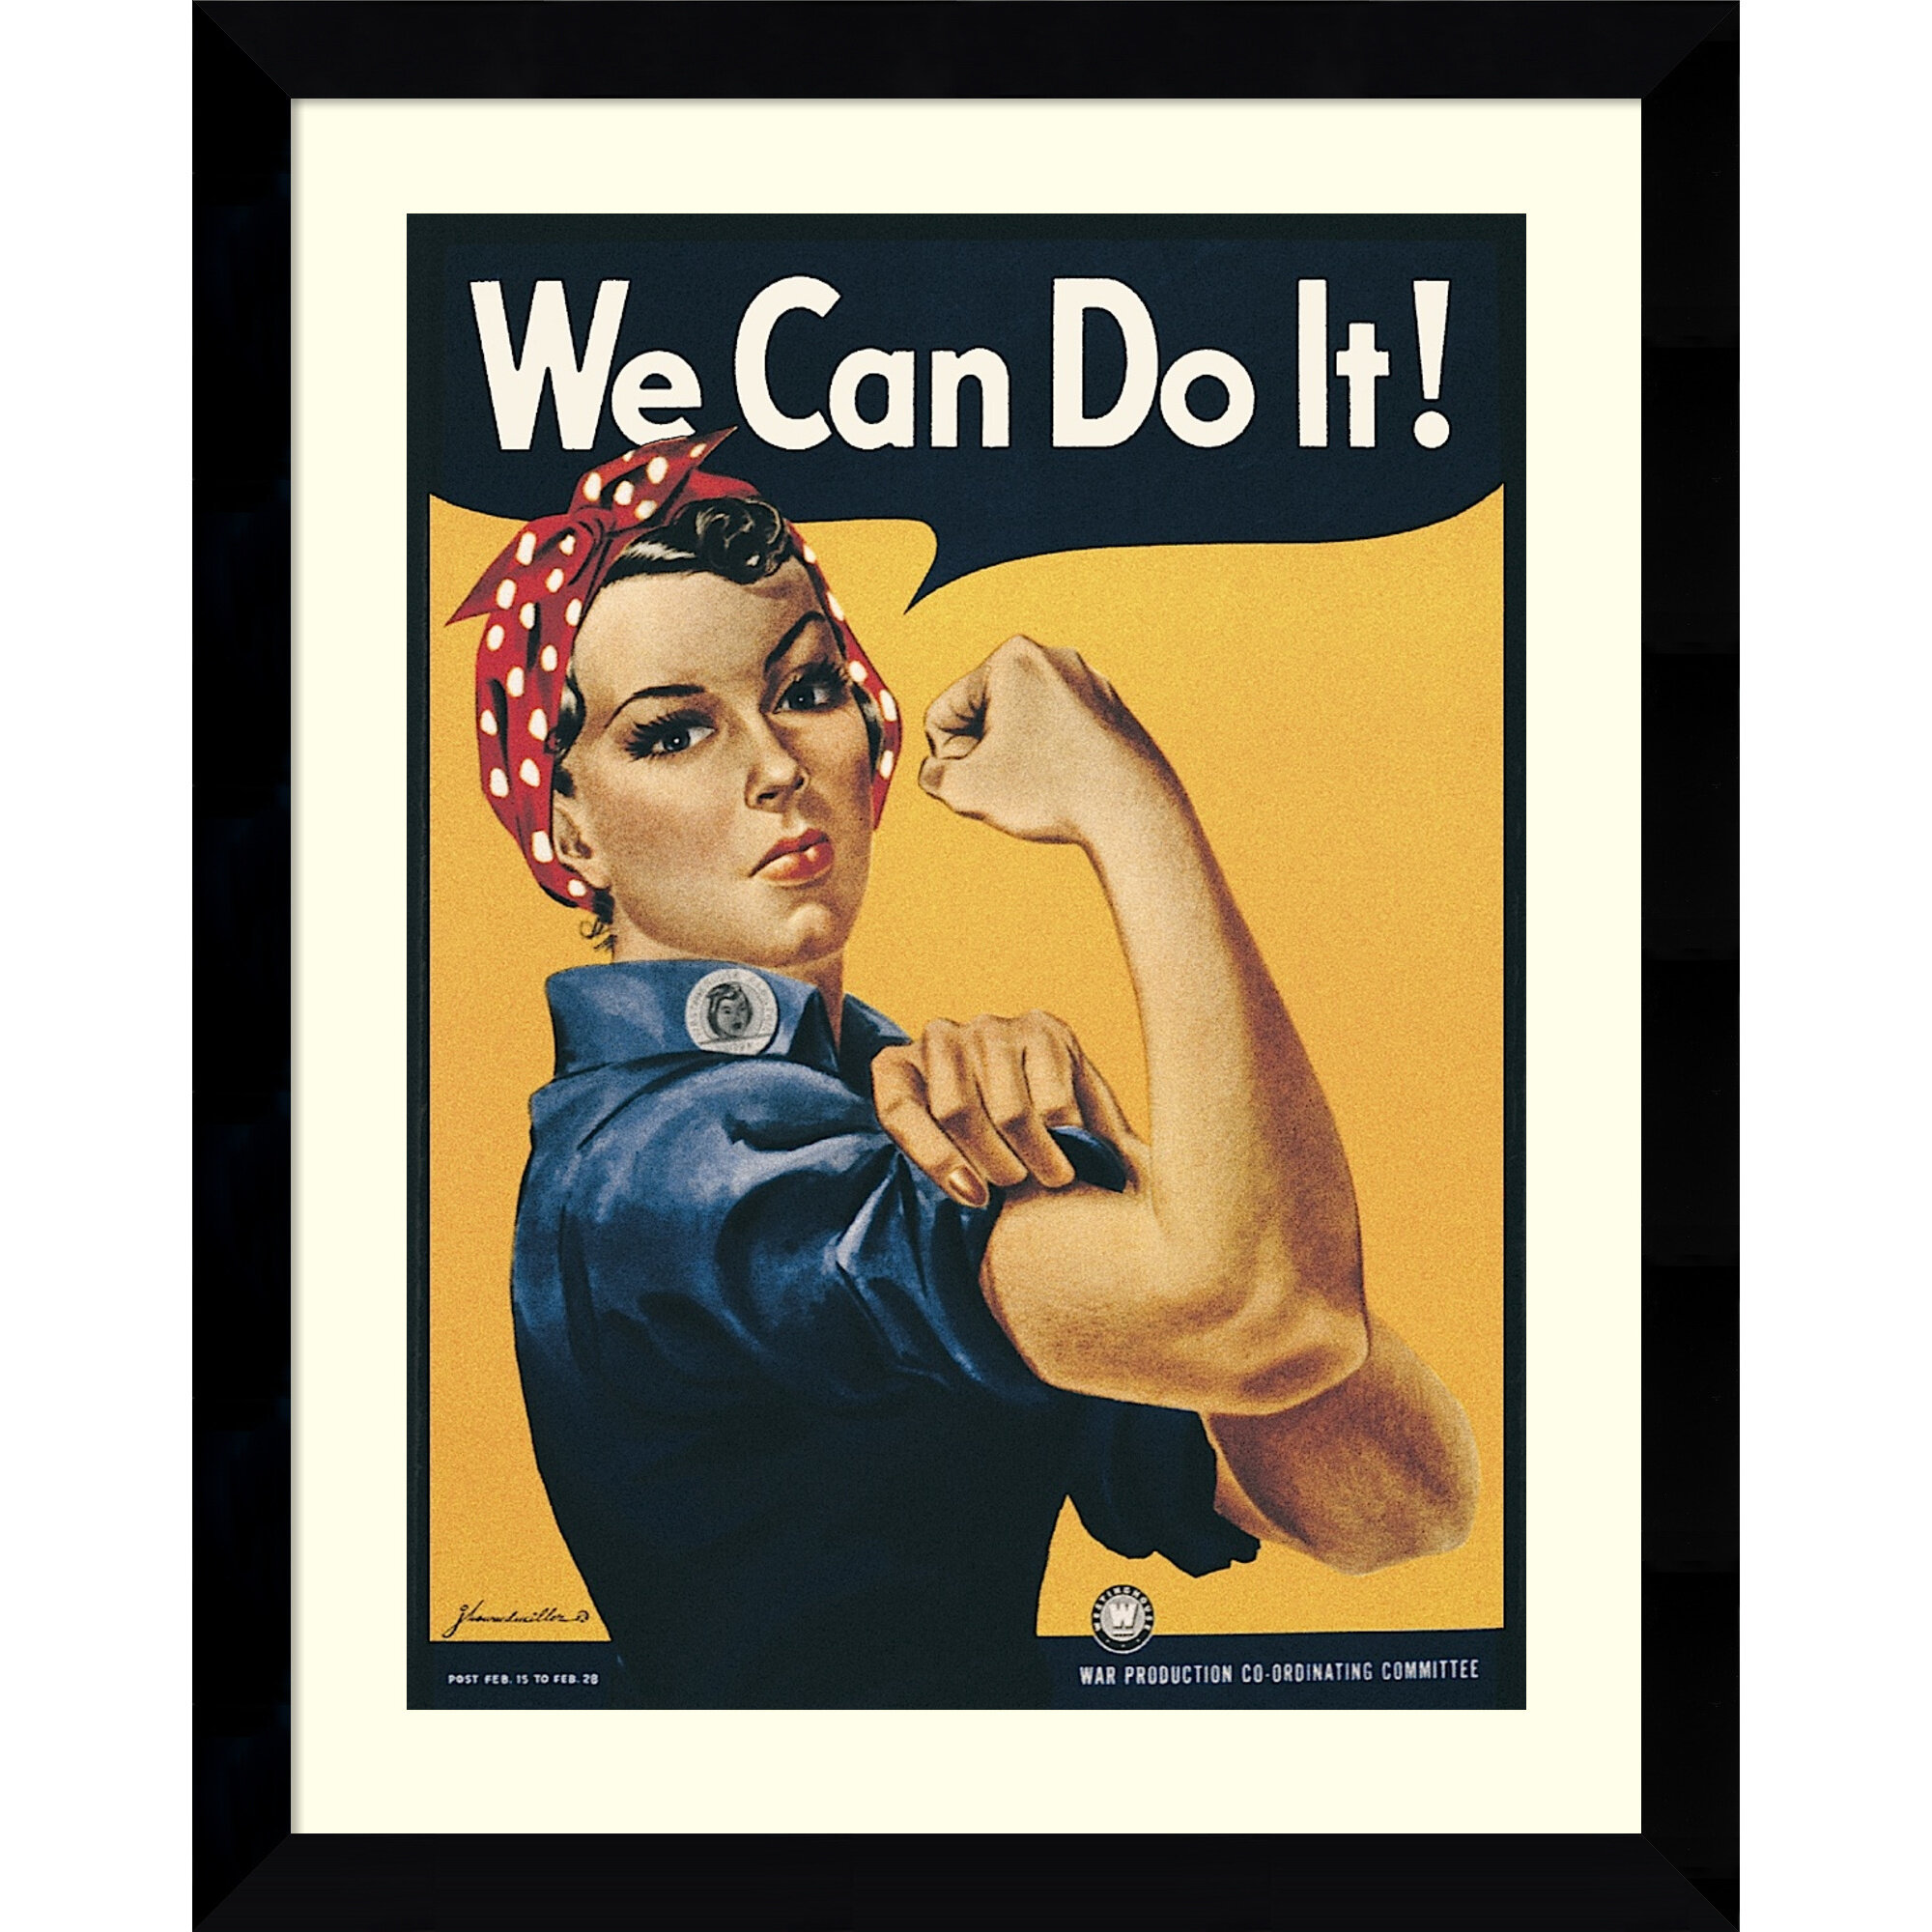 We can download. Клепальщицы Рози (Rosie the Riveter). Клепальщица Рози плакат. Rosie the Riveter плакат. Говард Миллер плакаты.